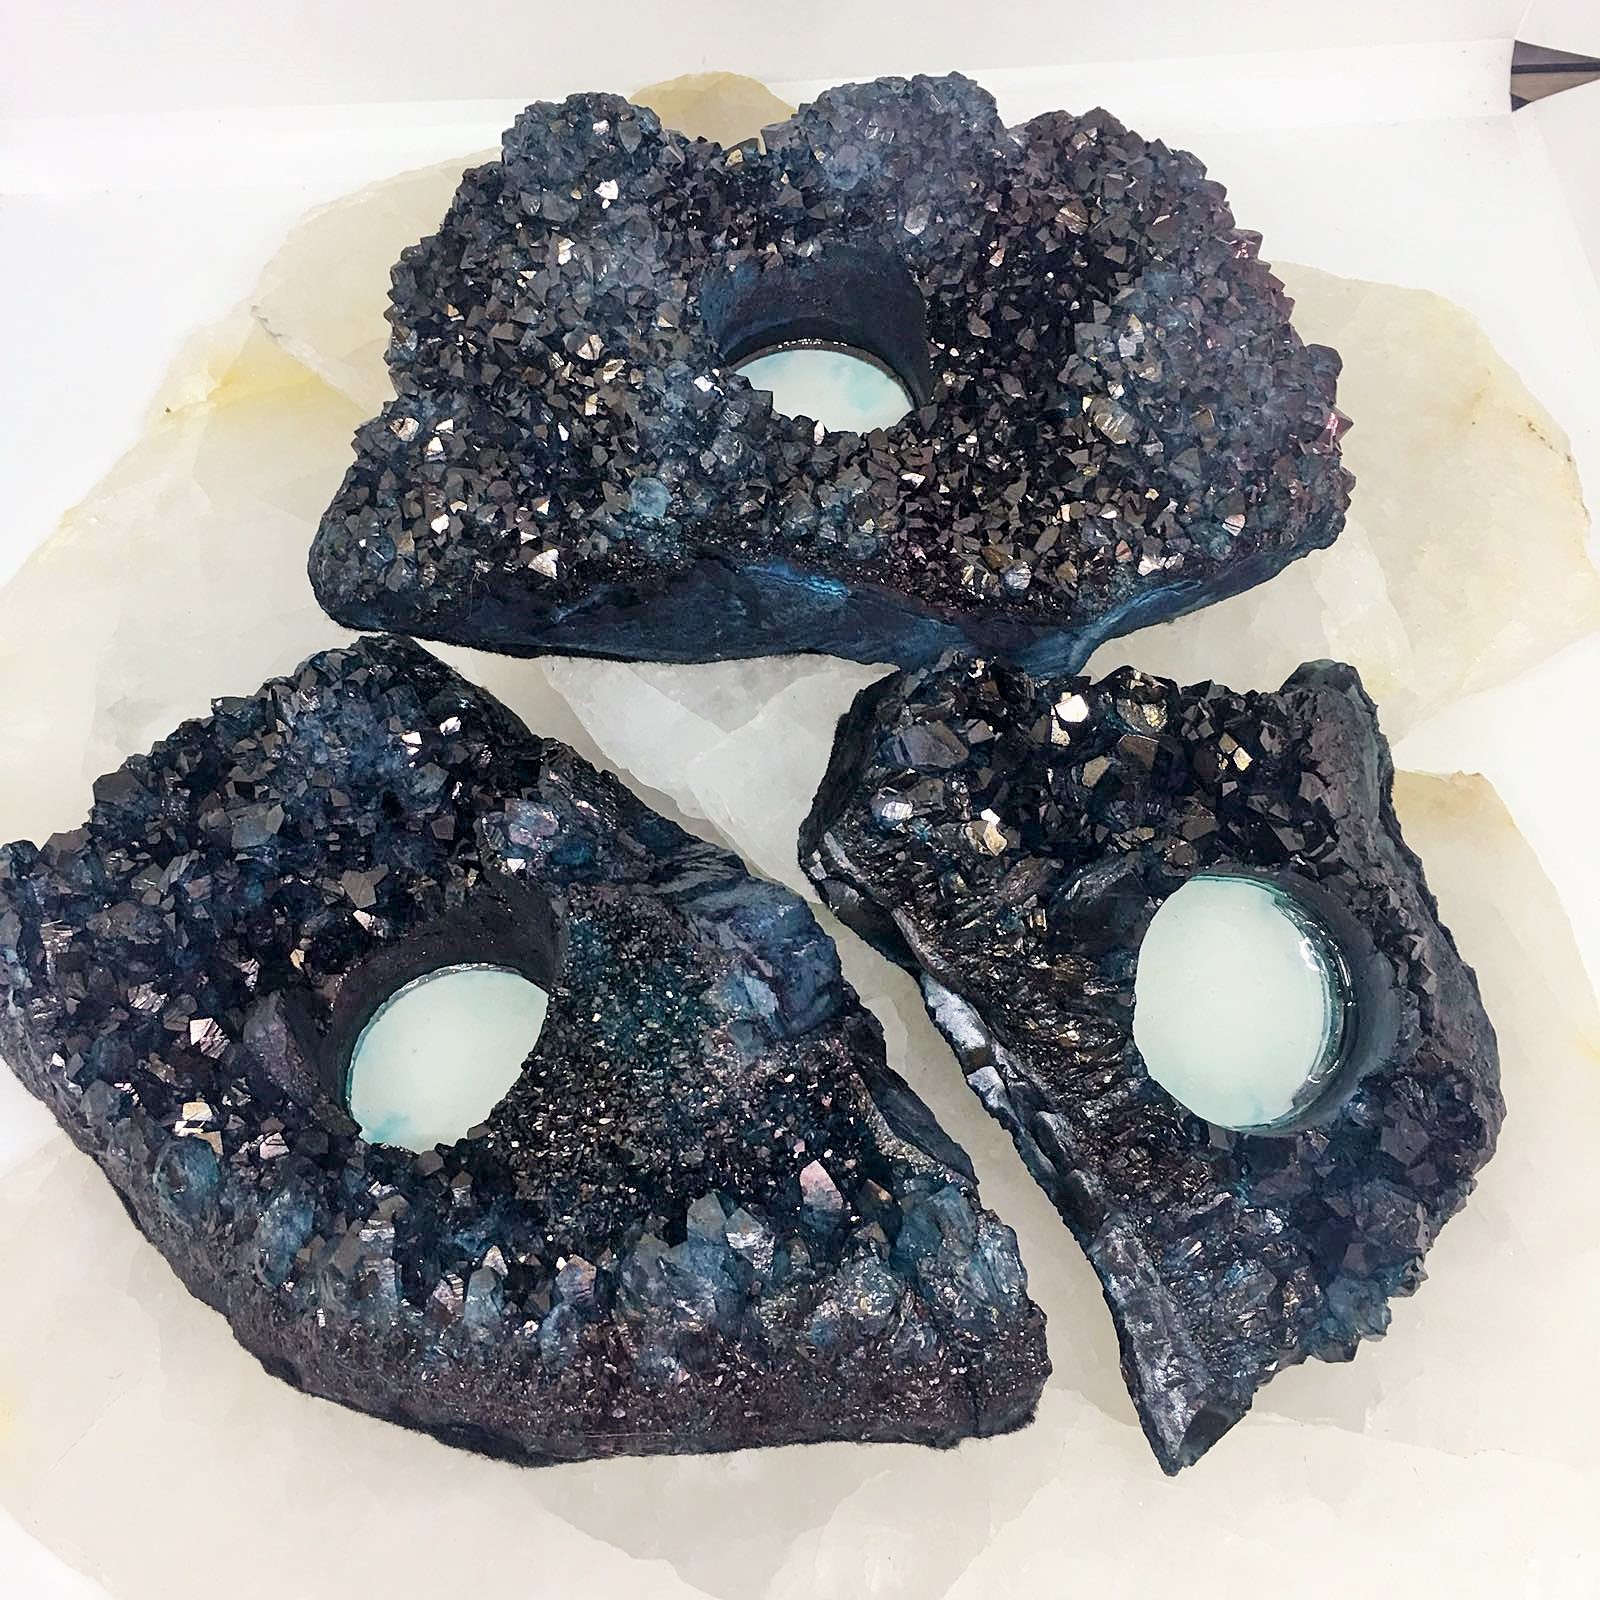 Stones from Uruguay - Amethyst Druzy Specimens Gemstone Candle Holder, Colorful Teal Dyed Amethyst Cluste Teal Light Candle Holder